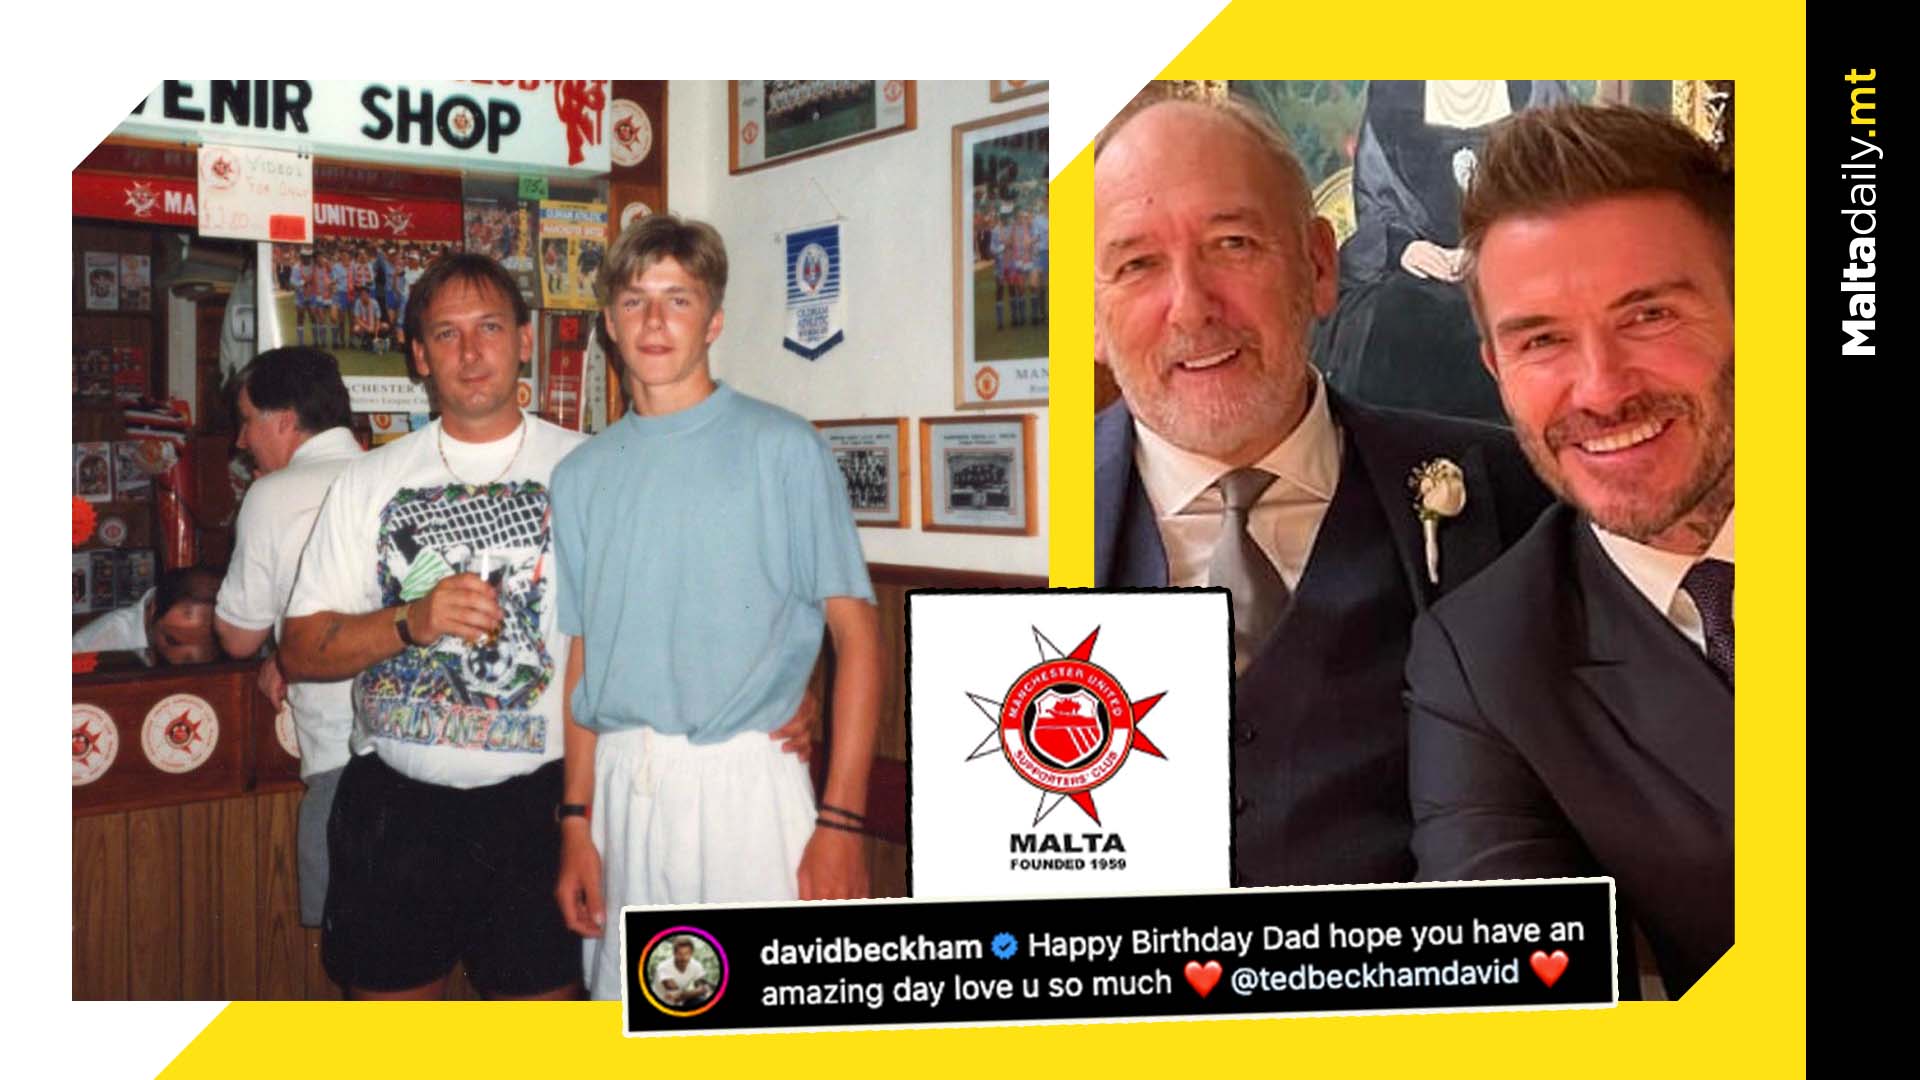 David Beckham Wishes Dad Happy Birthday With Photo In Malta Club